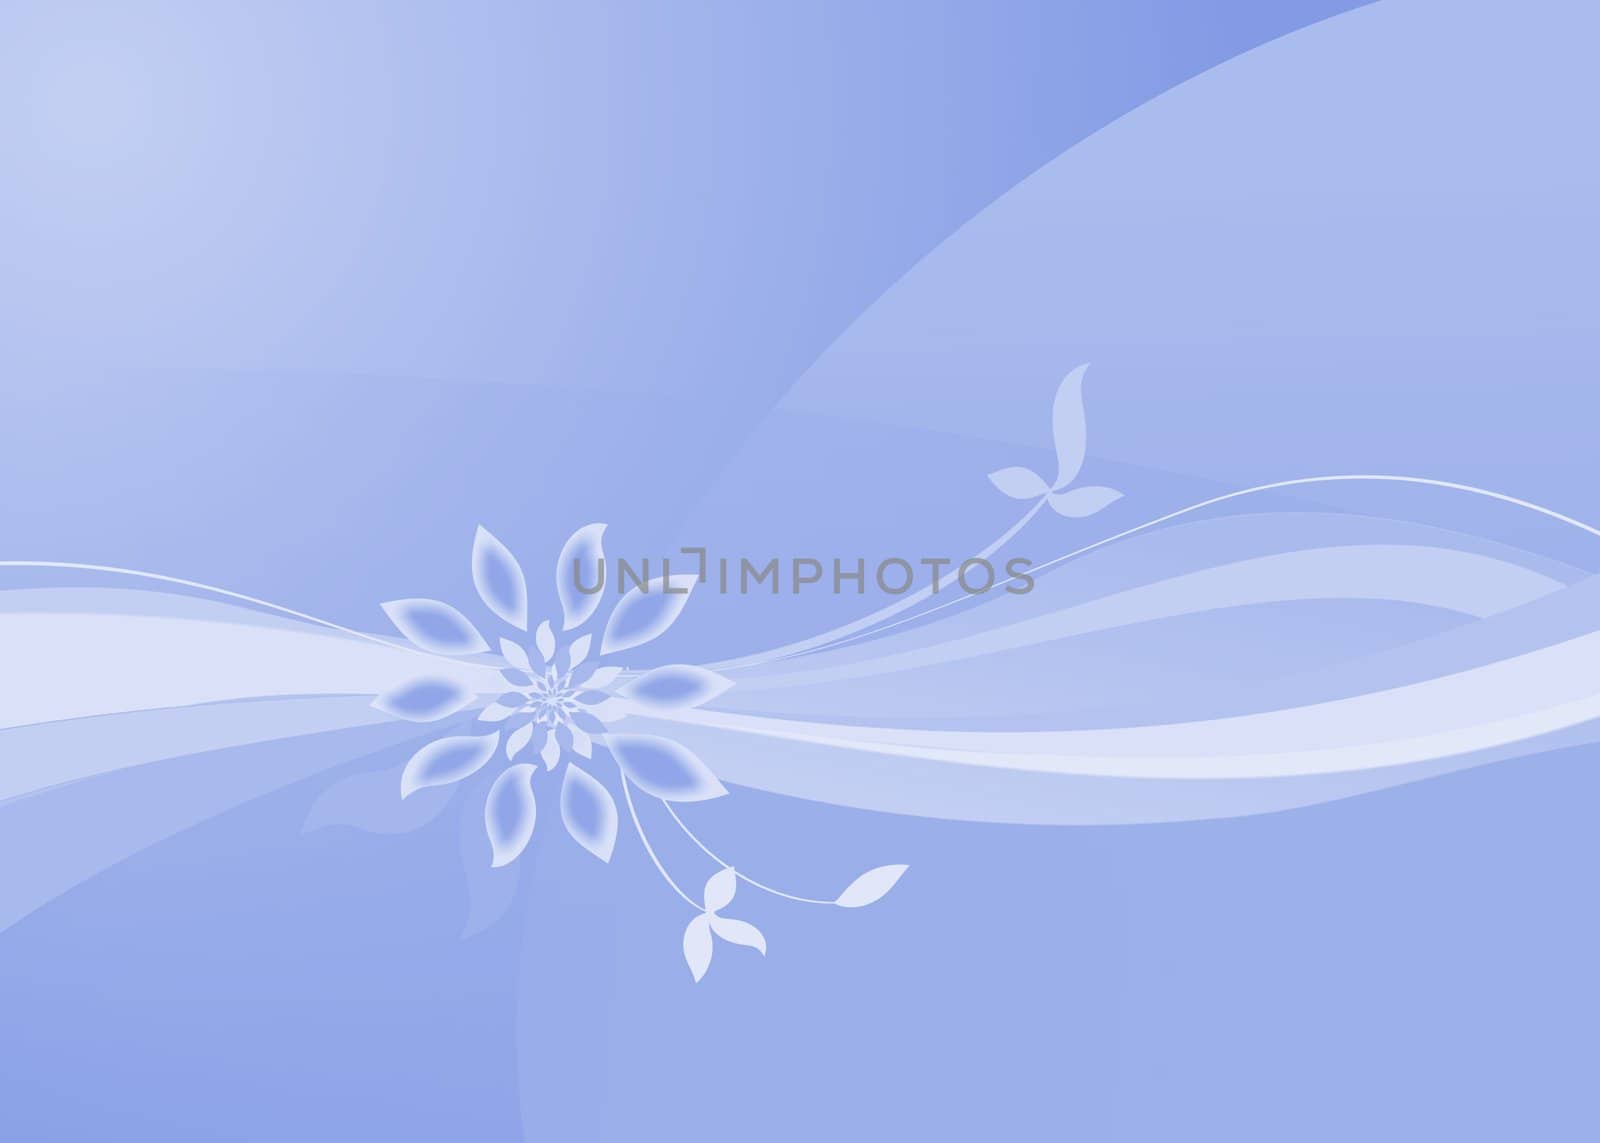 floral background - abstract art illustration - web site design